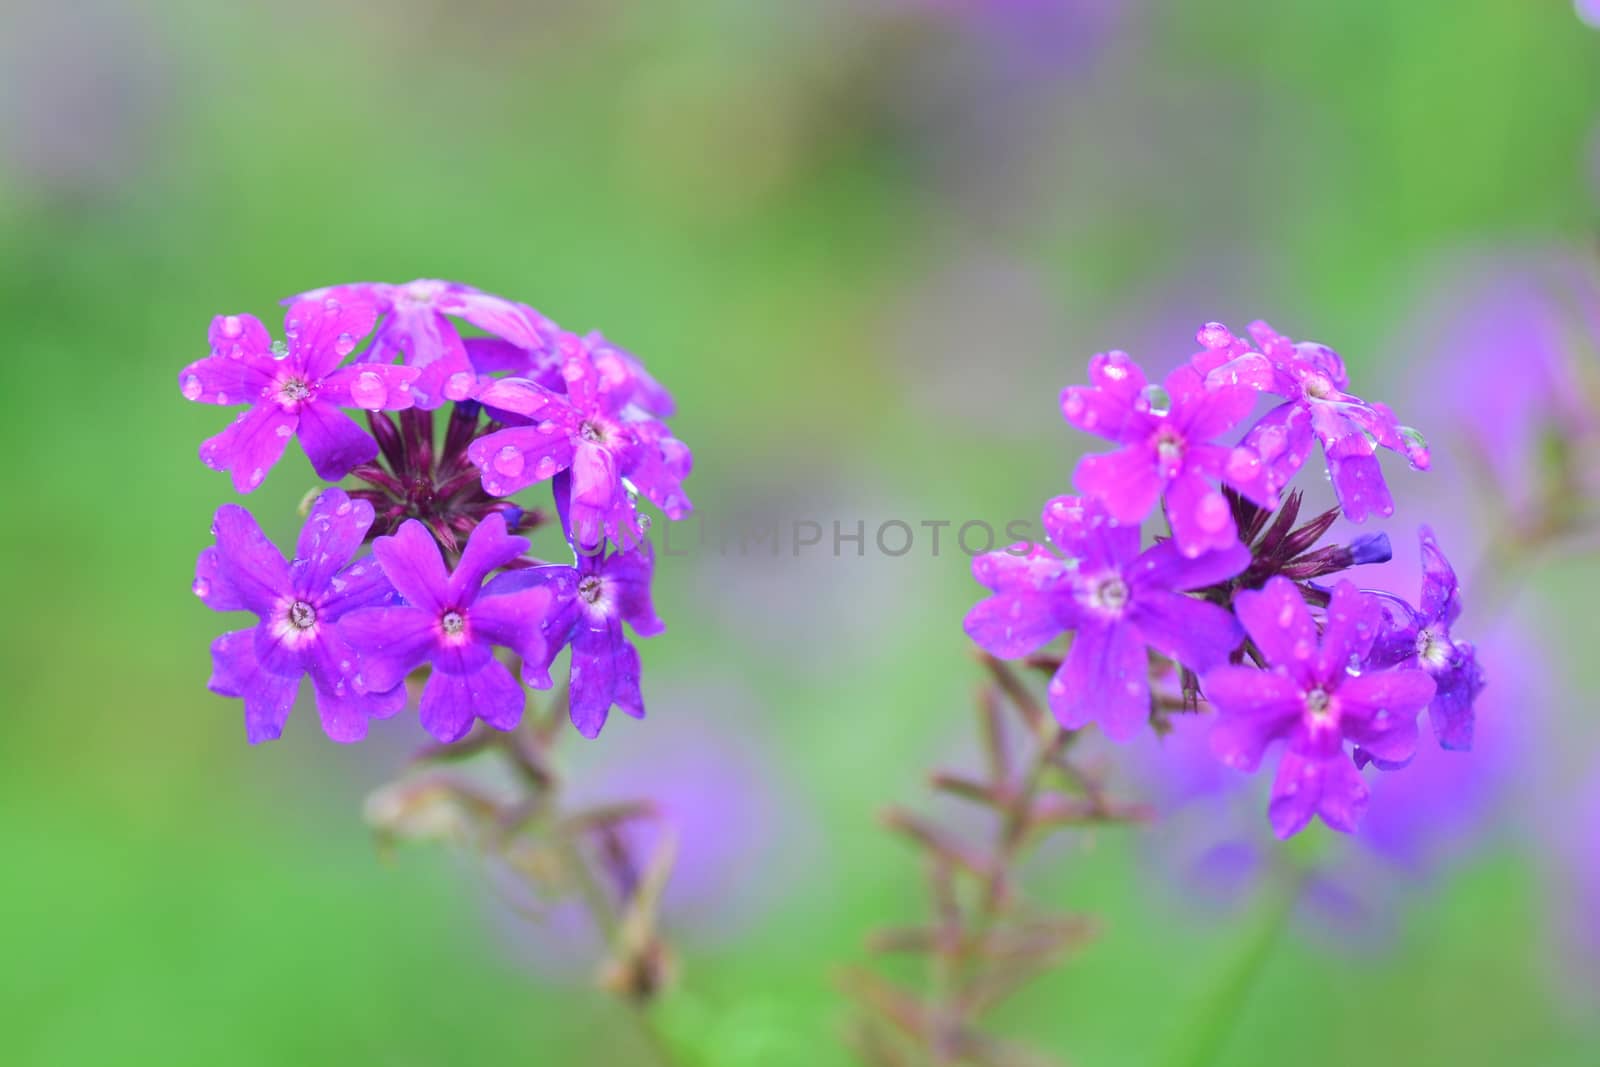 Blooming purple Verbena flowers by ideation90